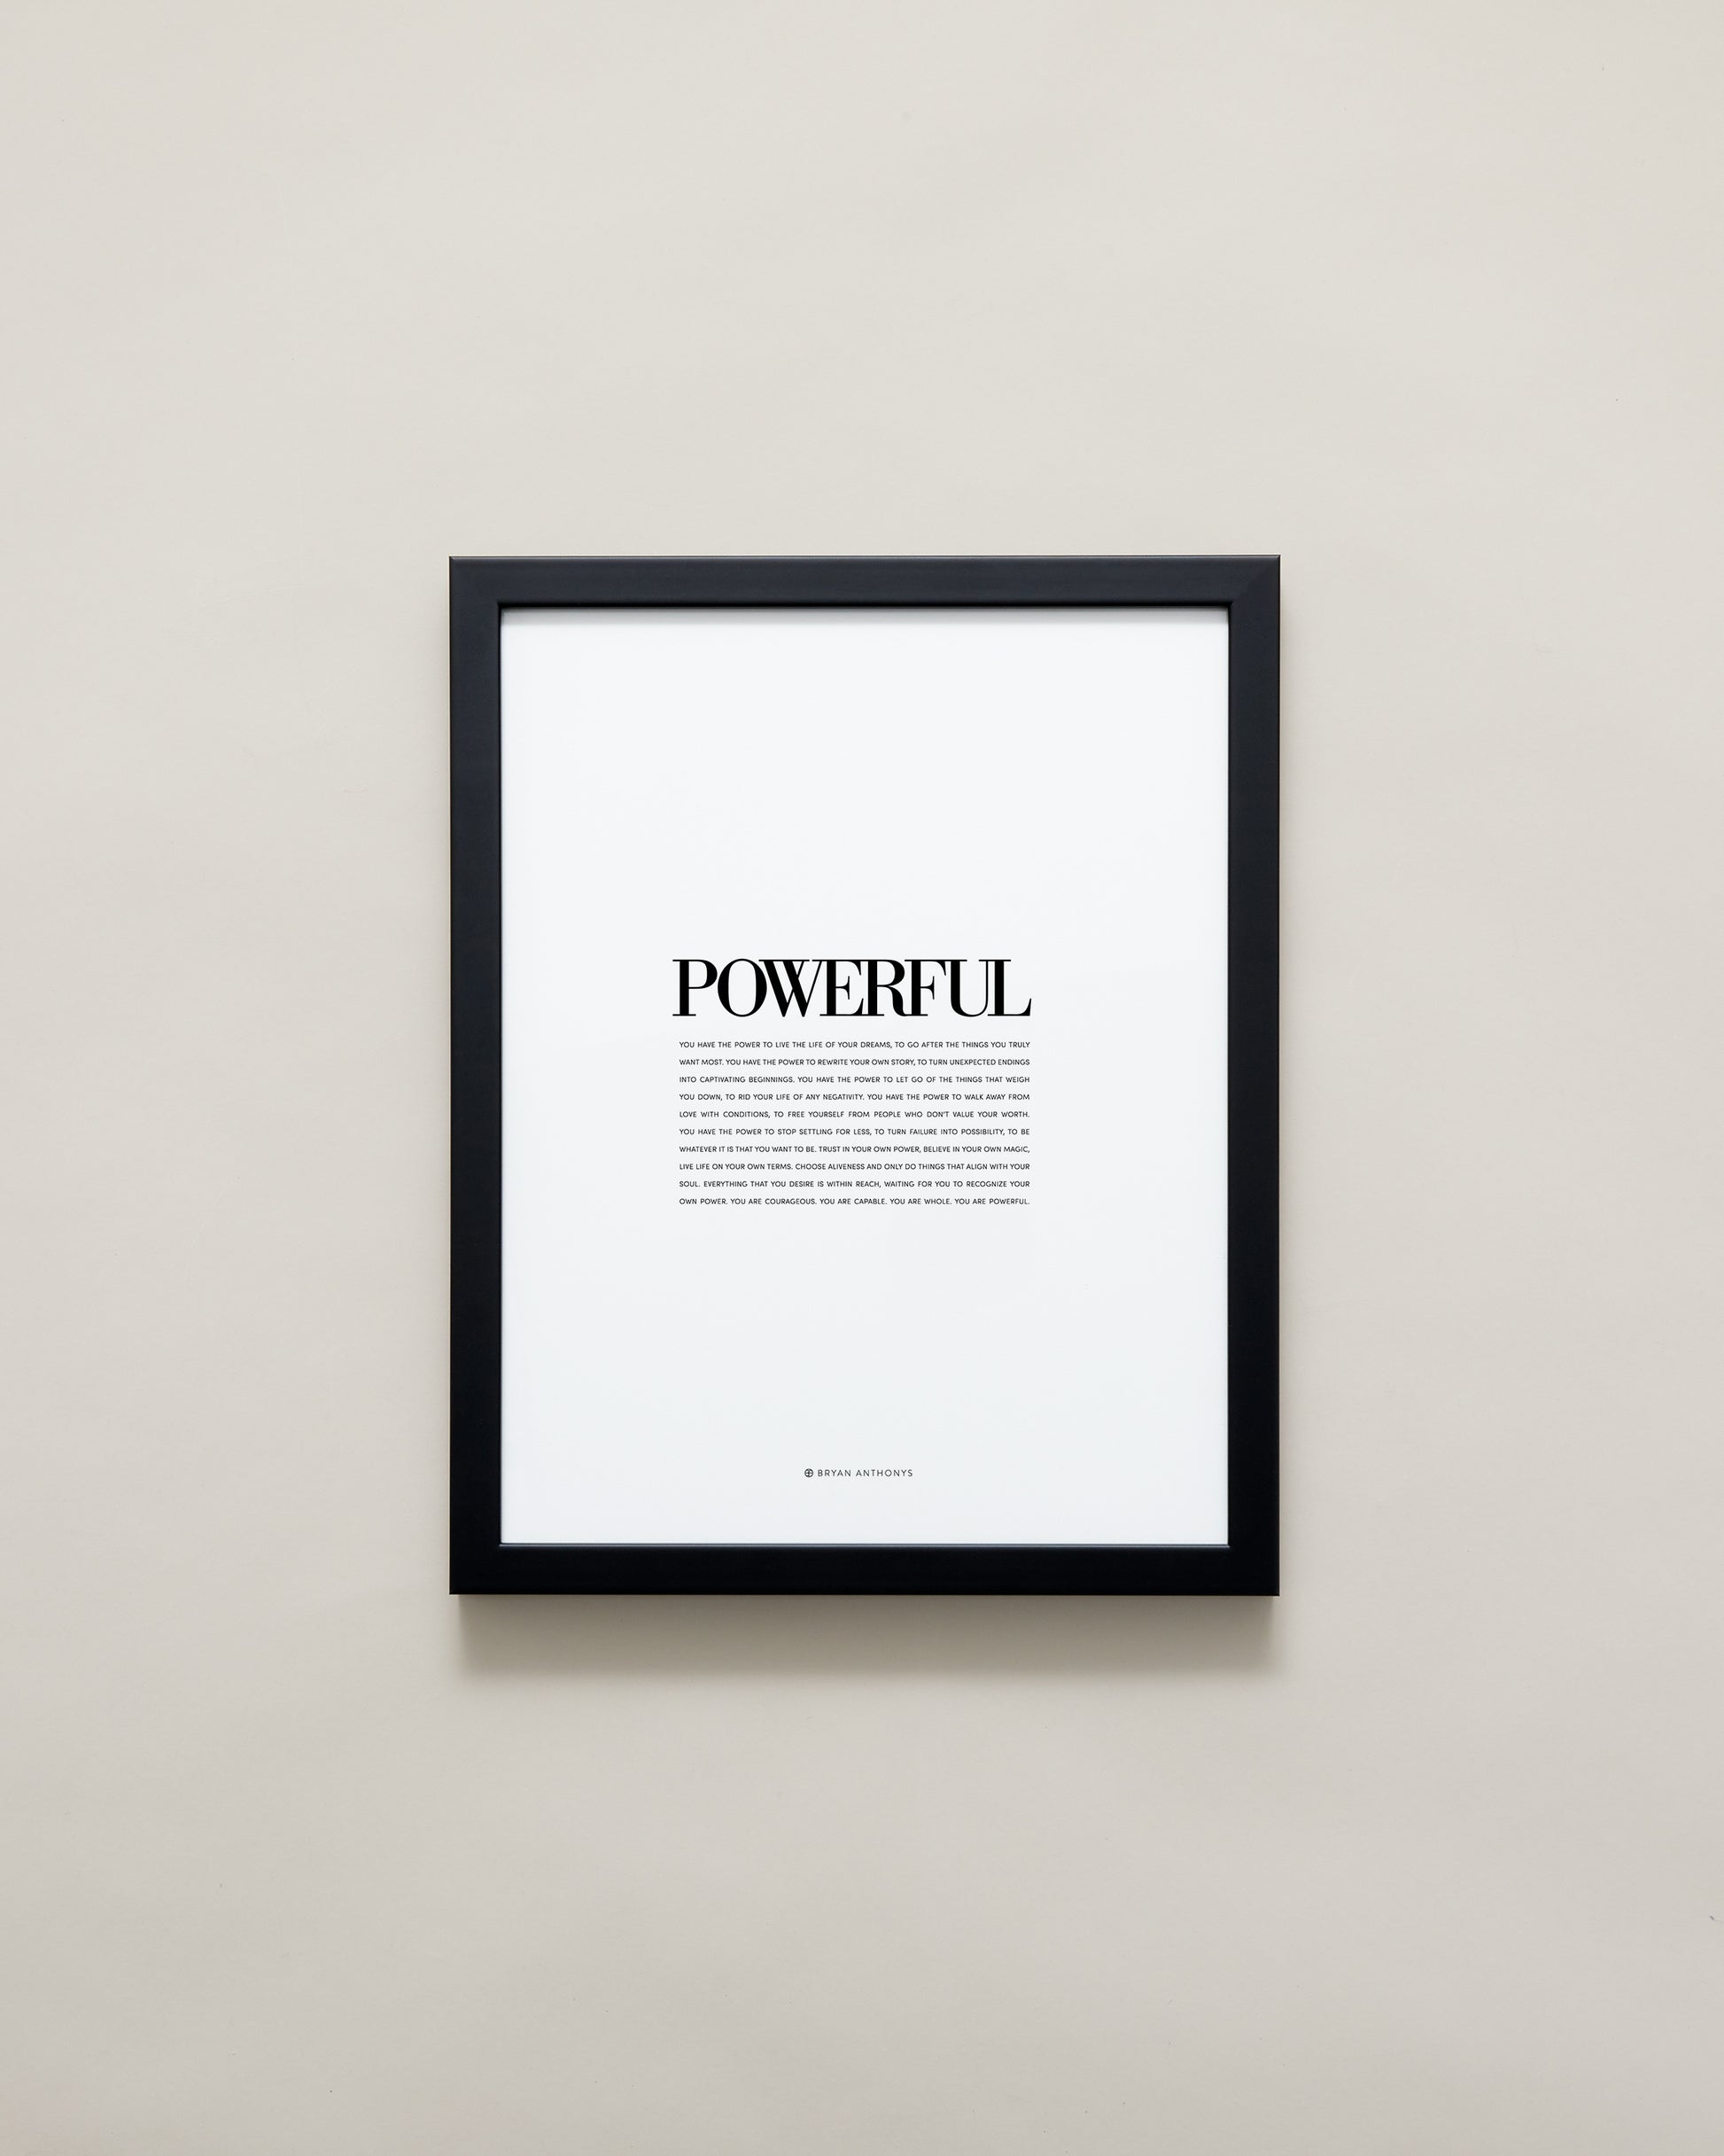 Bryan Anthonys Home Decor Purposeful Prints Powerful Editorial Framed Print Black Frame 11x14